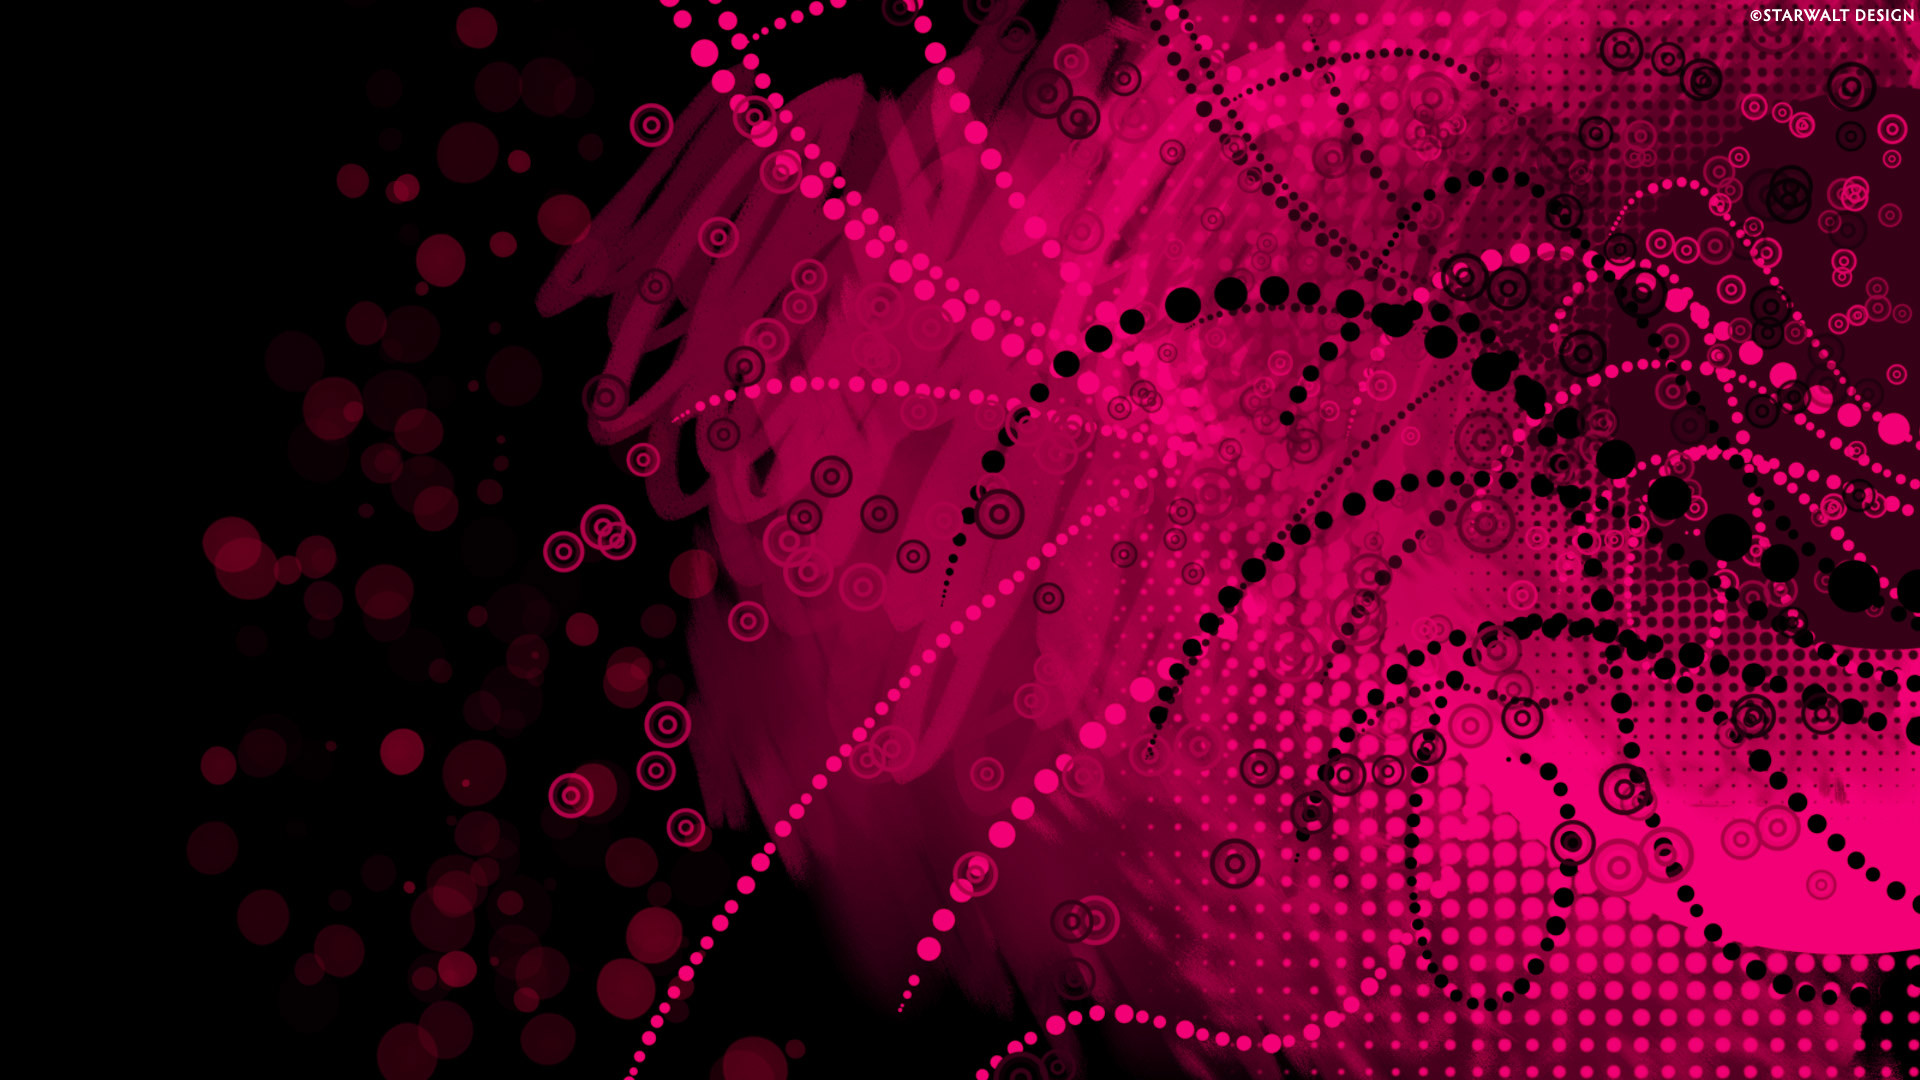 1920x1080 Pink And Black Wallpaper Backgrounds 3 Desktop Wallpaper. Pink And Black  Wallpaper Backgrounds 3 Desktop Wallpaper